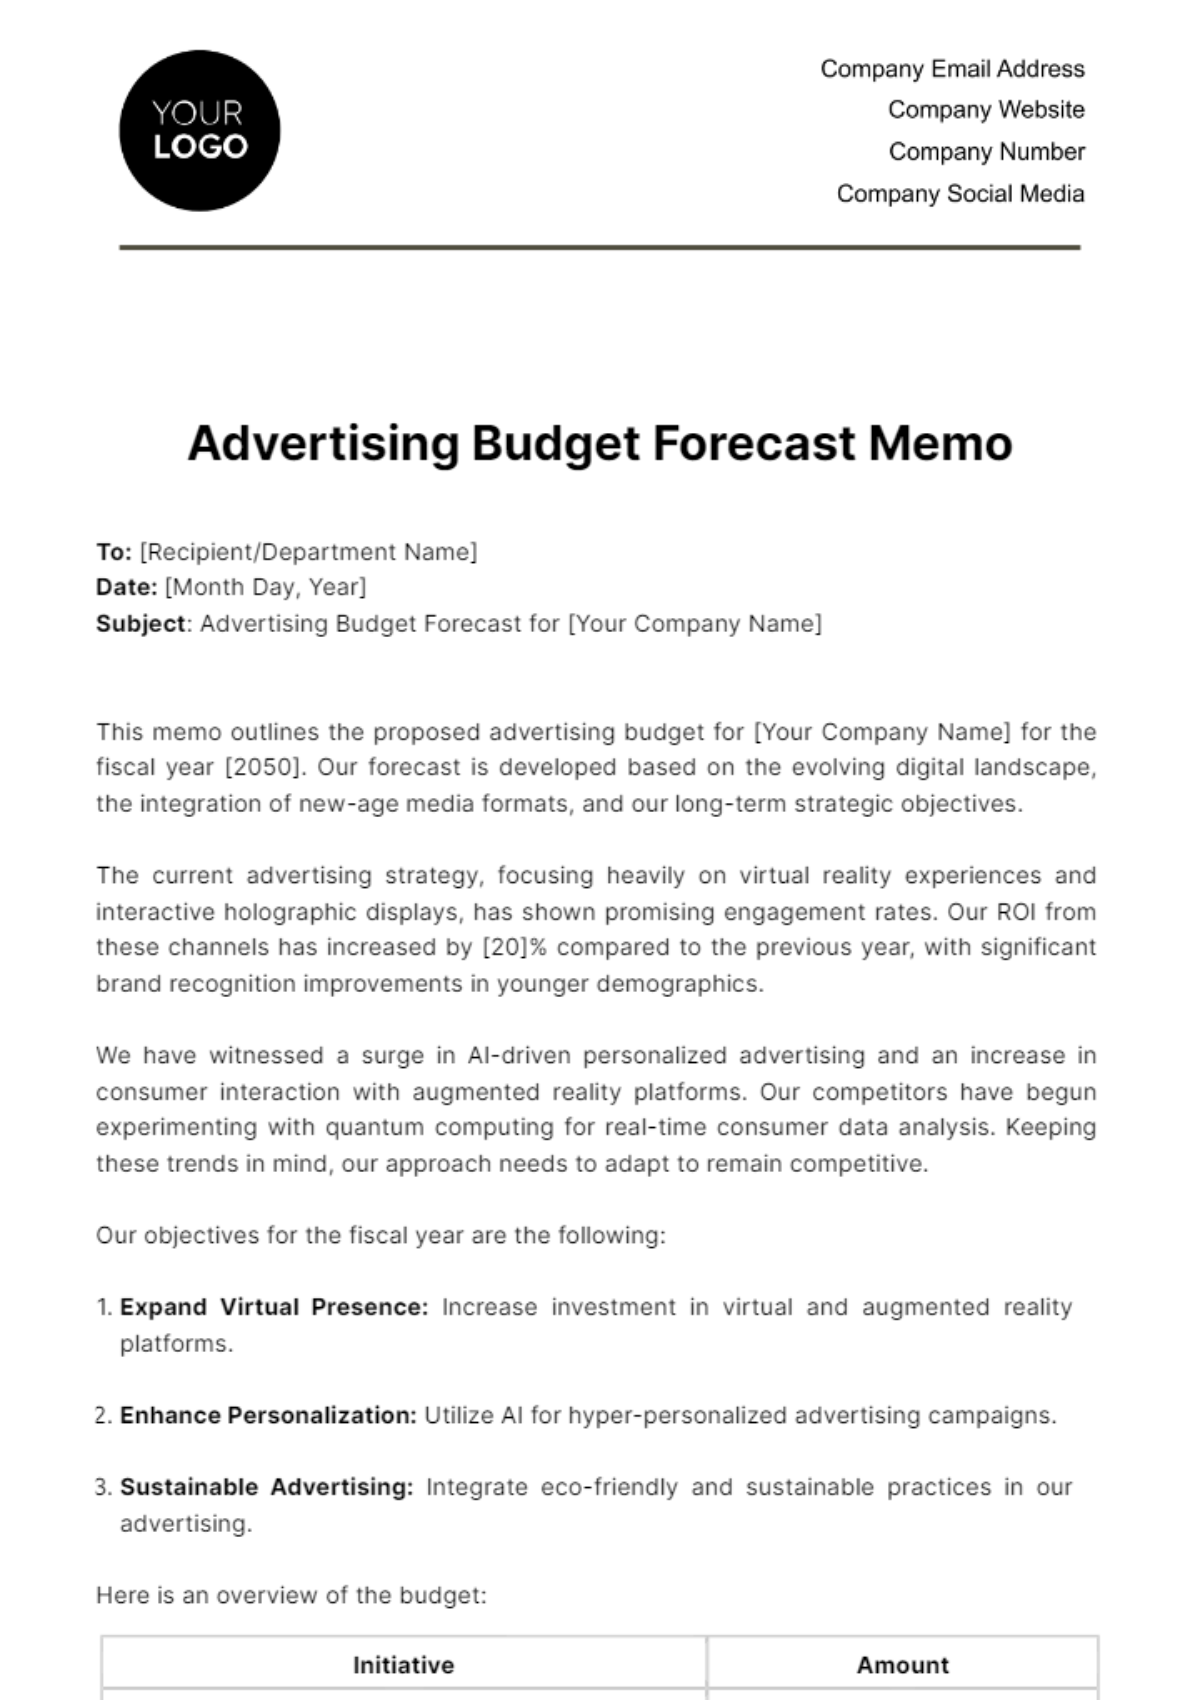 Advertising Budget Forecast Memo Template